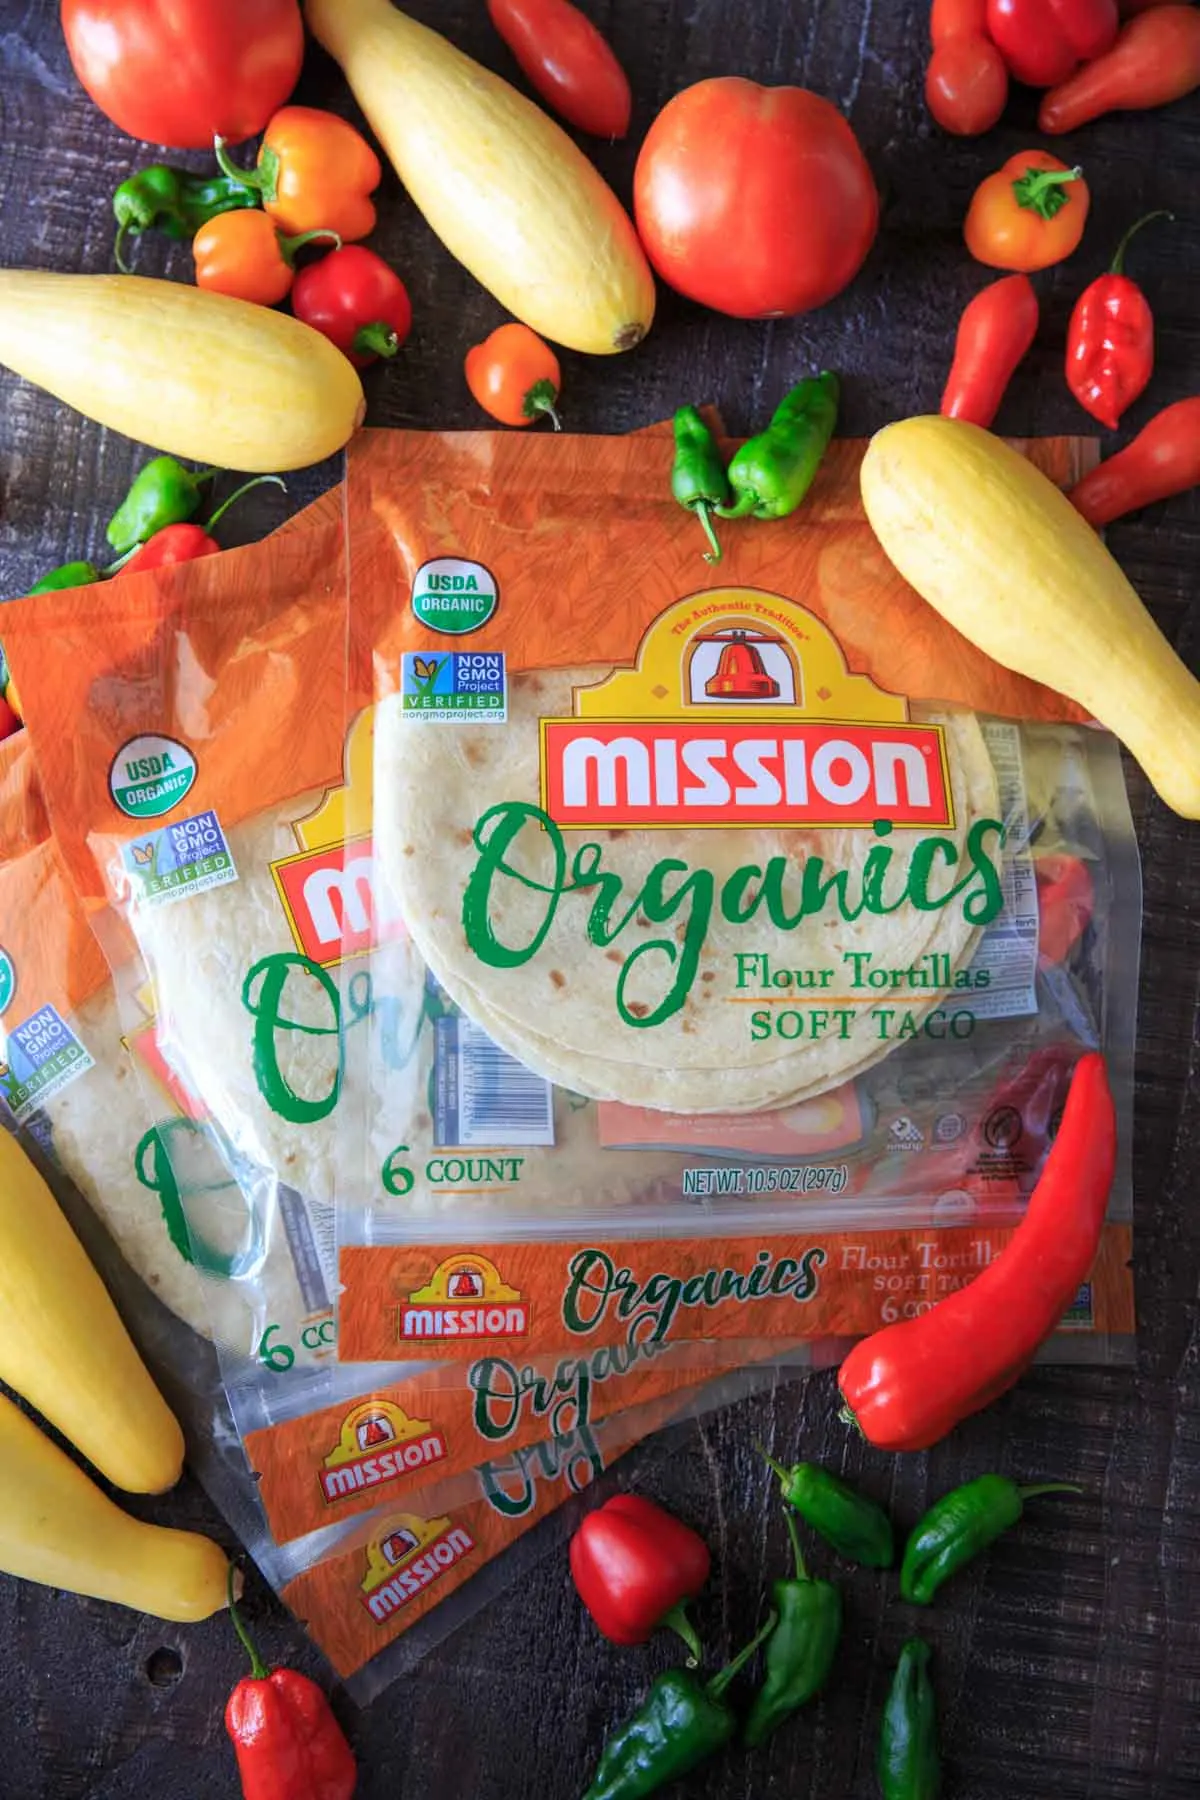 Mission Organics Tortillas with fresh produce